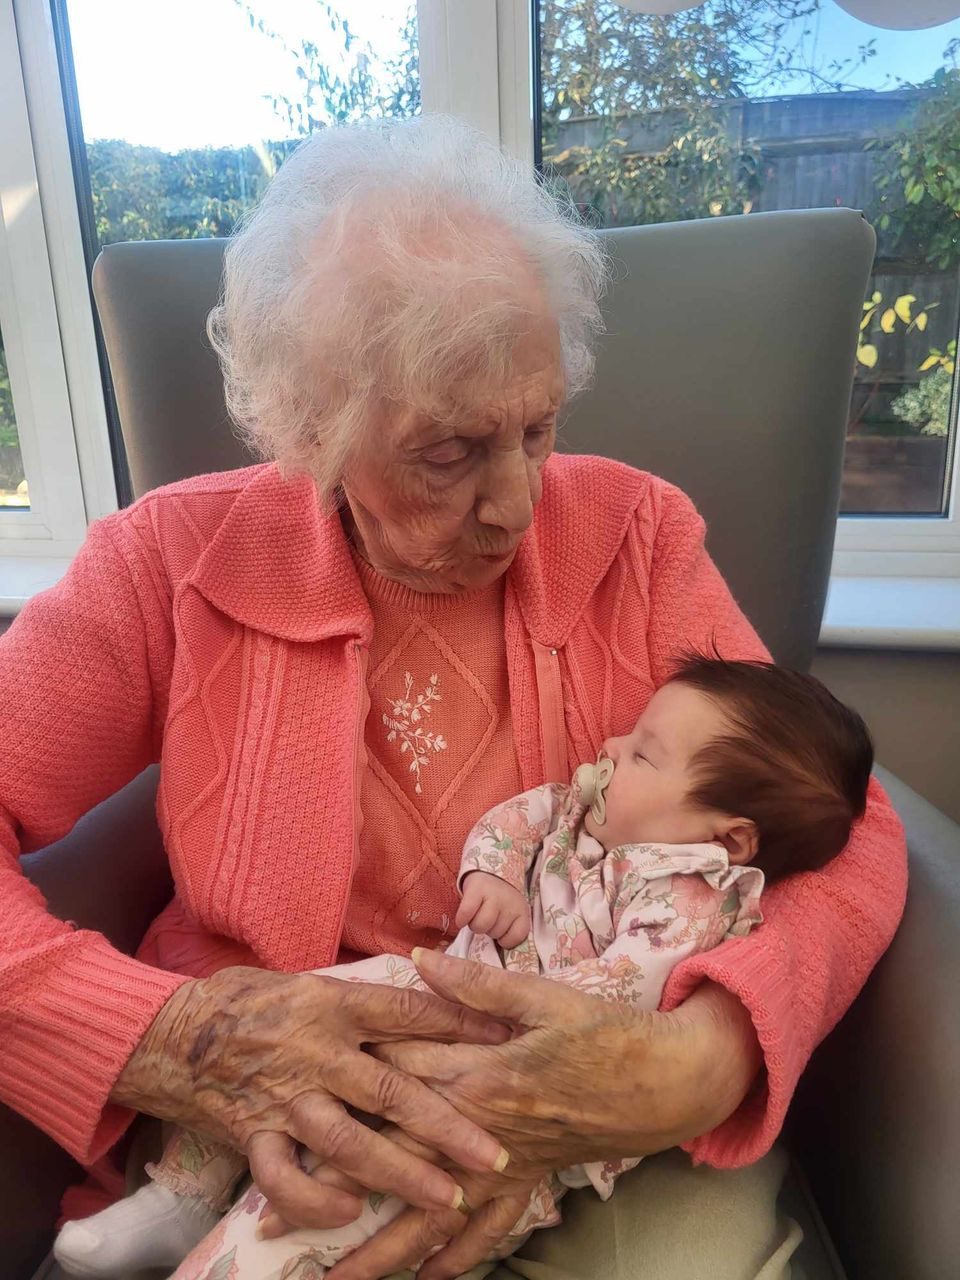 Elderly lady holds sleeping infant